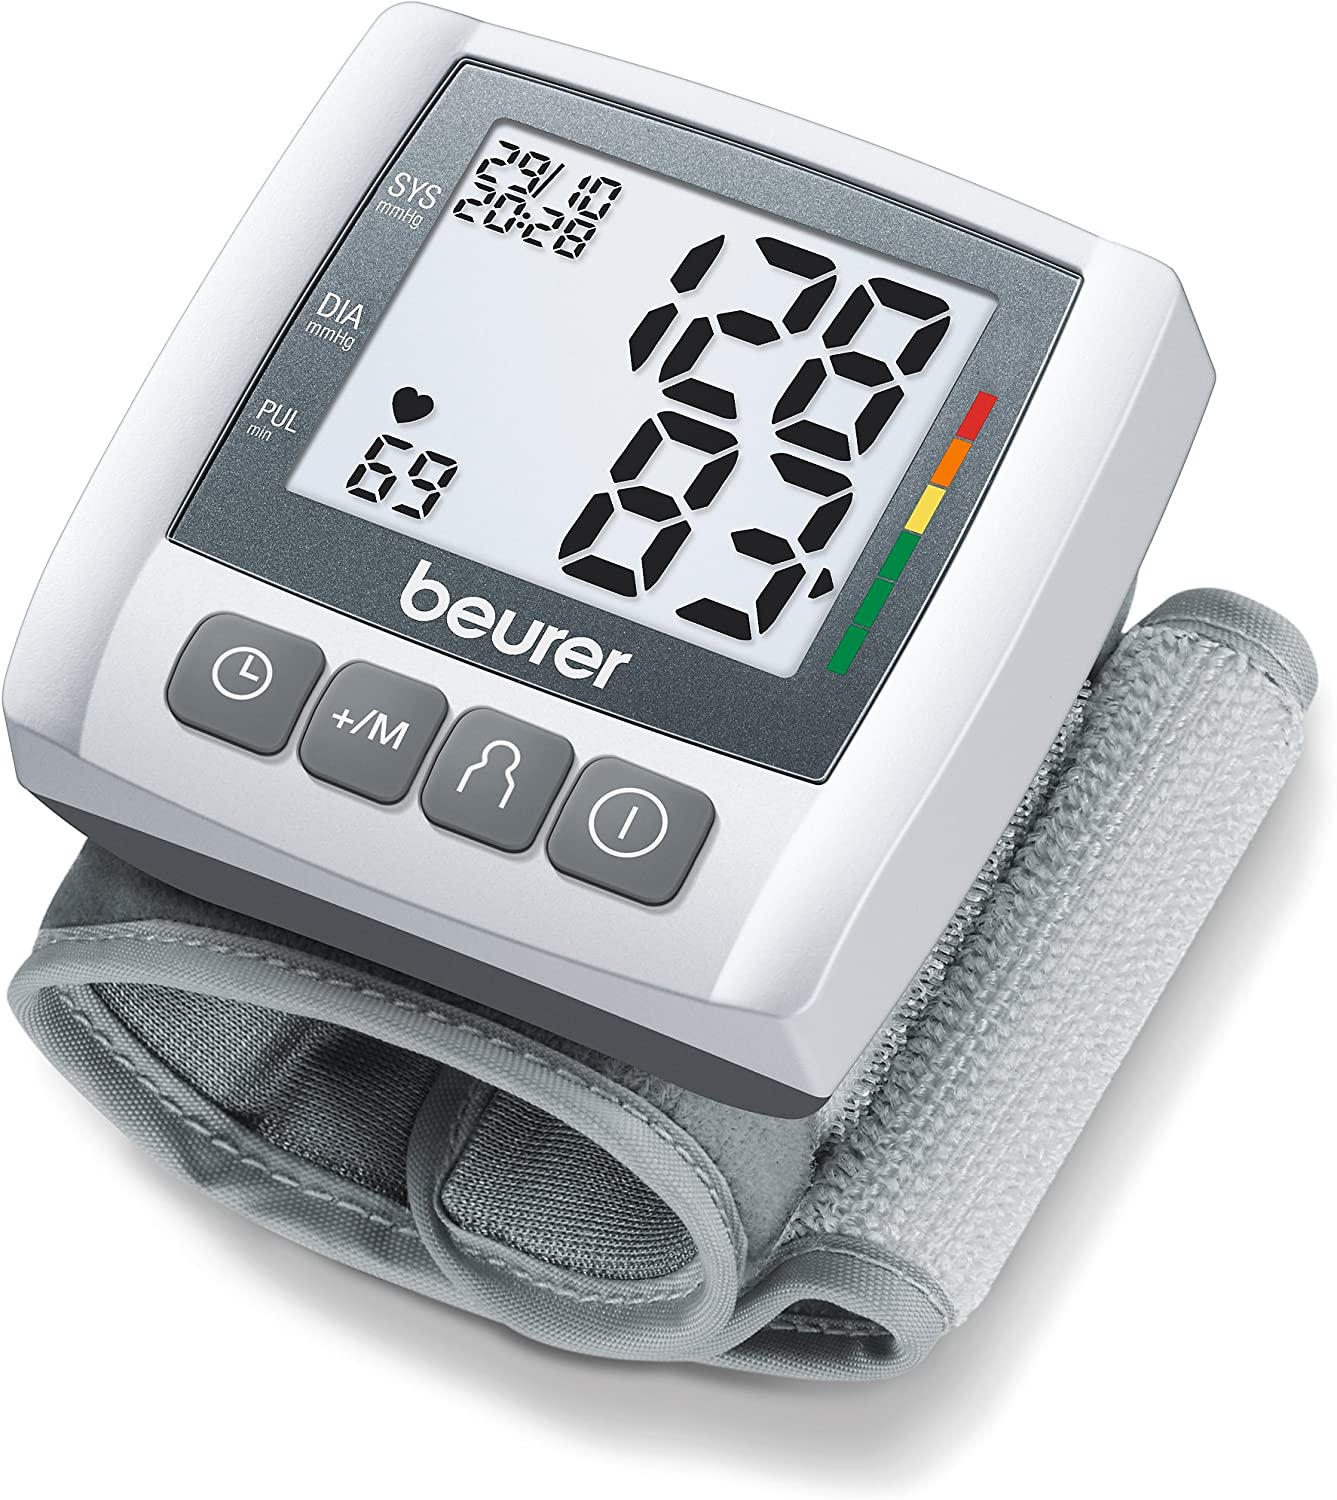 Beurer BC 30 Wrist Blood Pressure Monitor - Grey/White